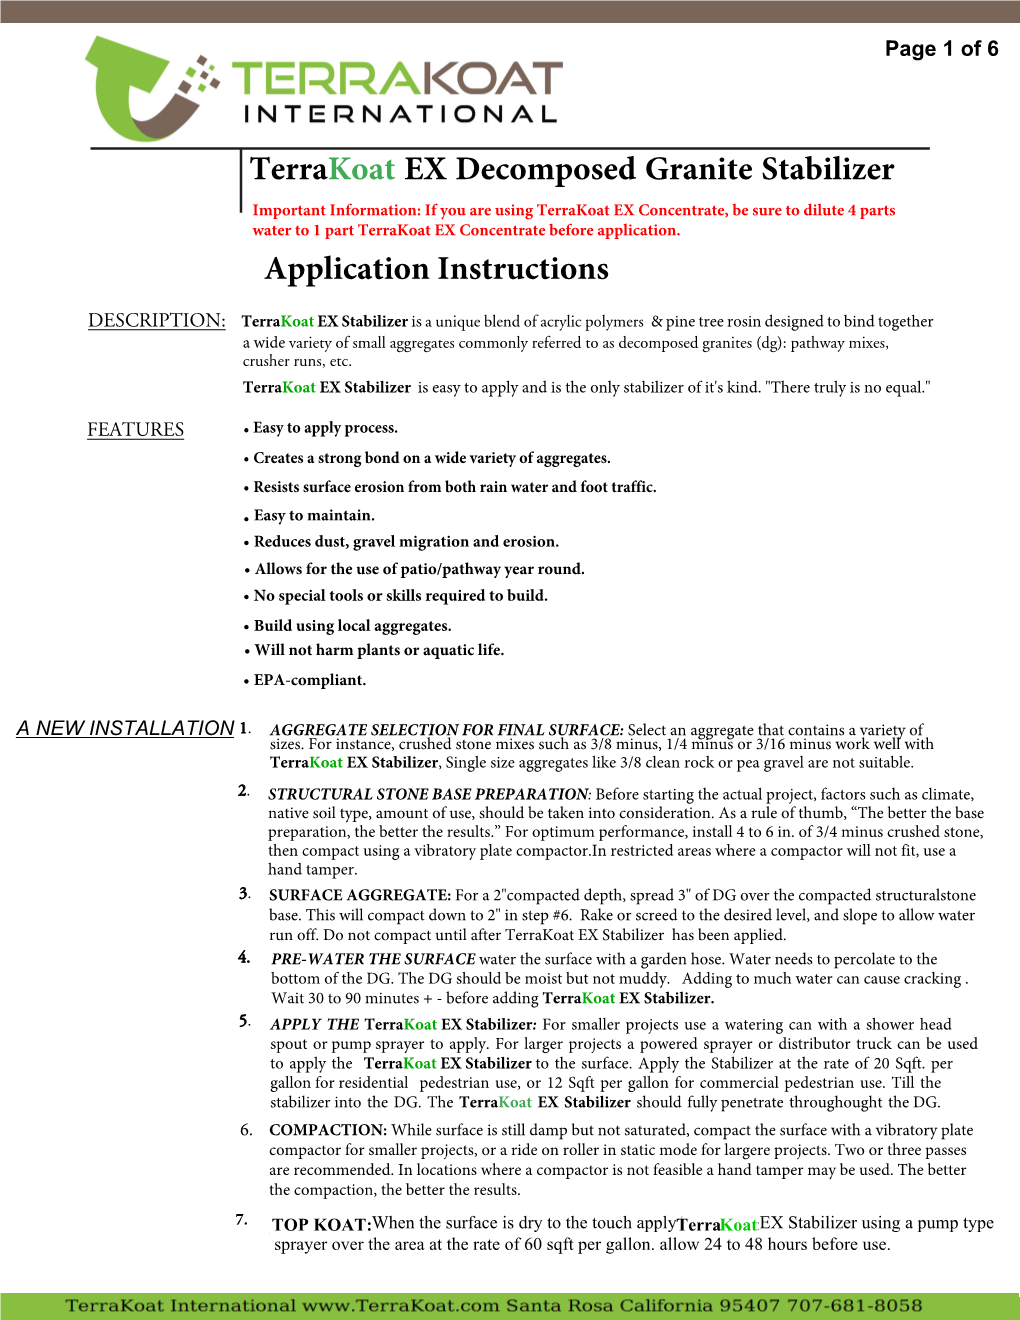 Terrakoat EX Decomposed Granite Stabilizer Application Instructions